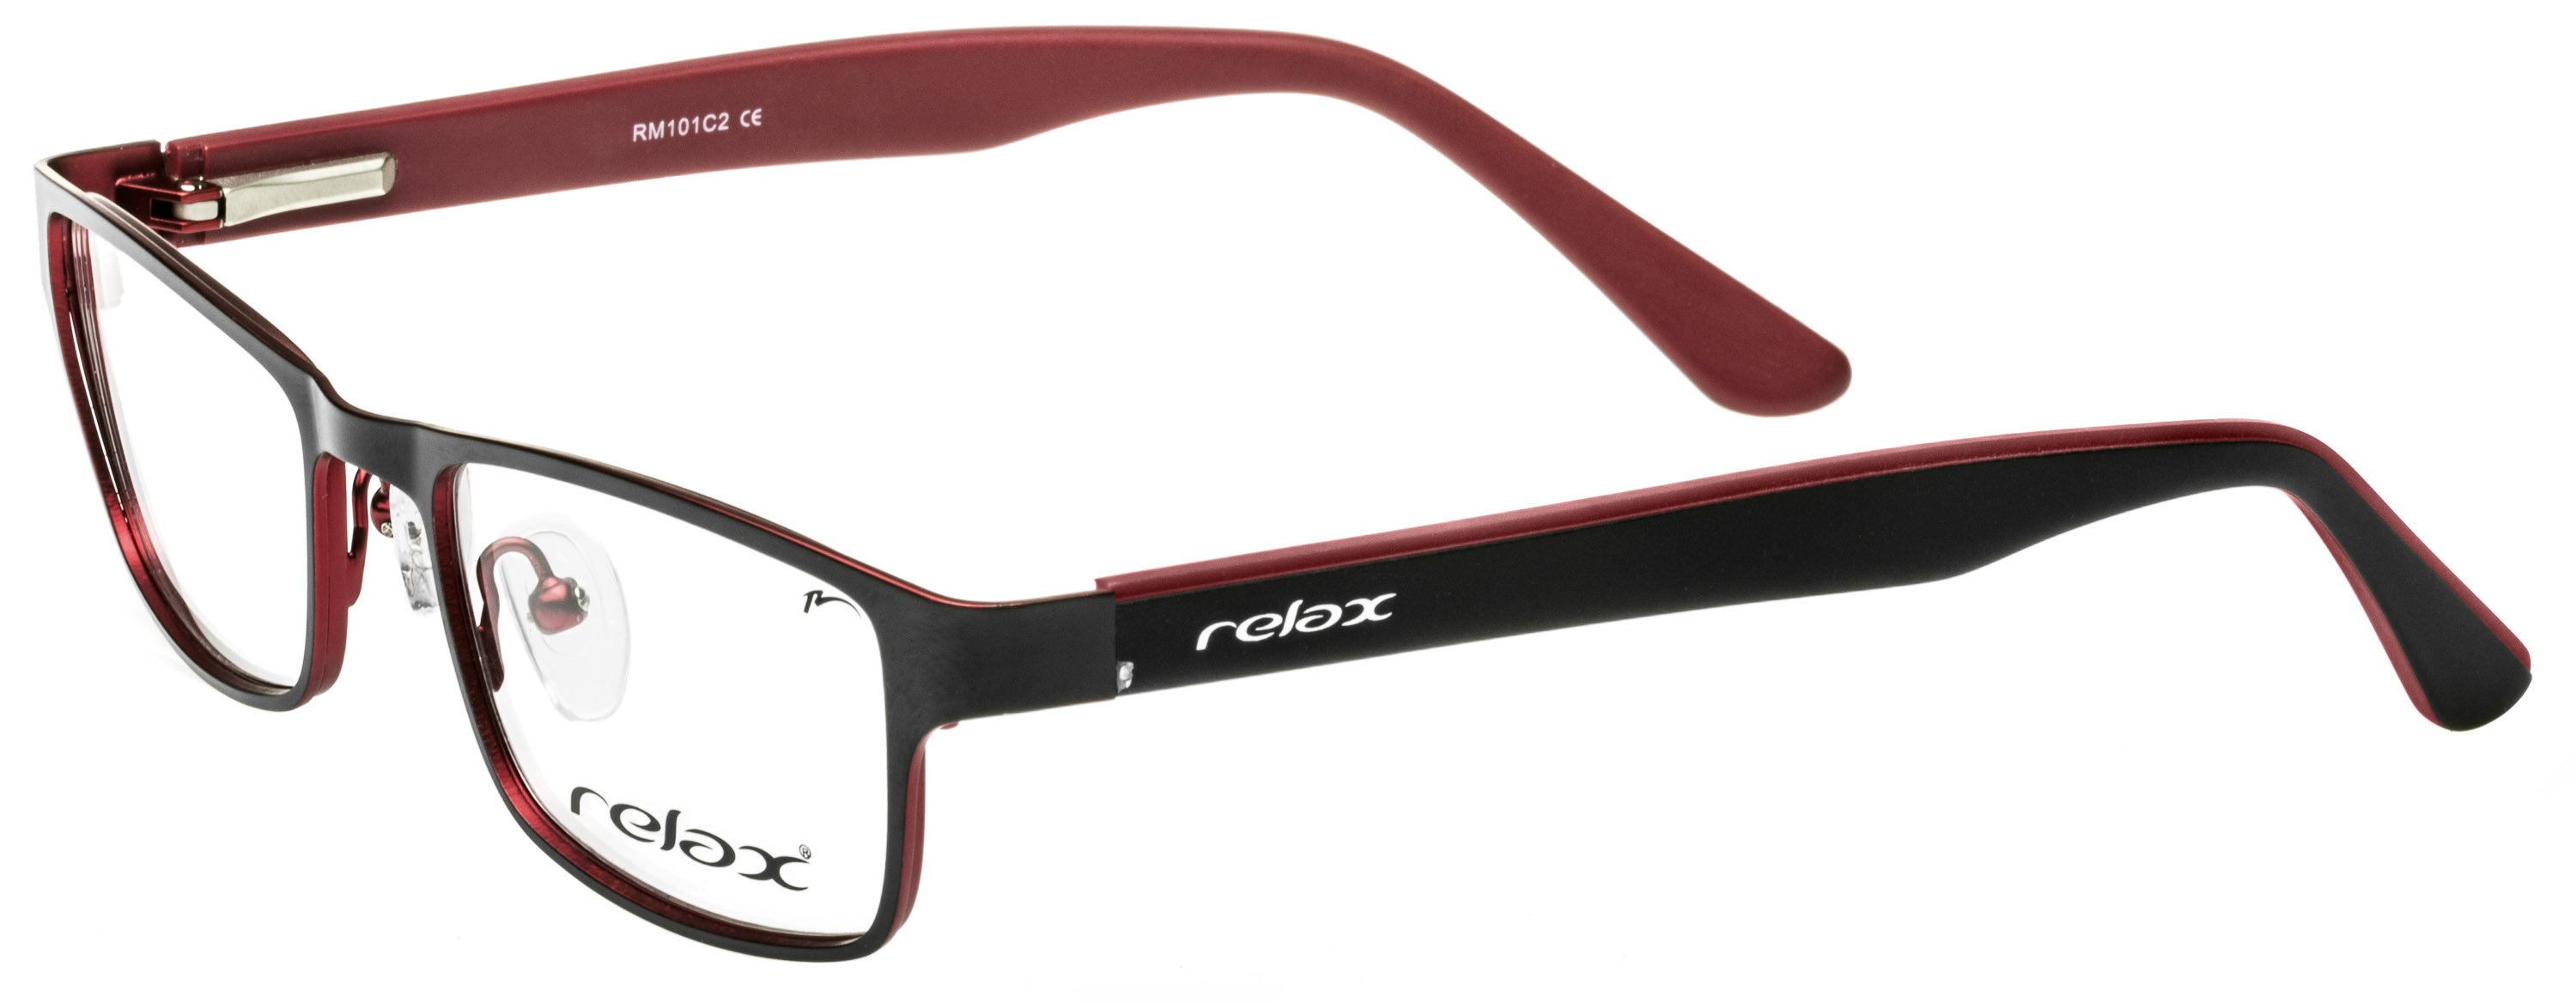 Dětské dioptrické brýle Relax Koki RM101C2 -